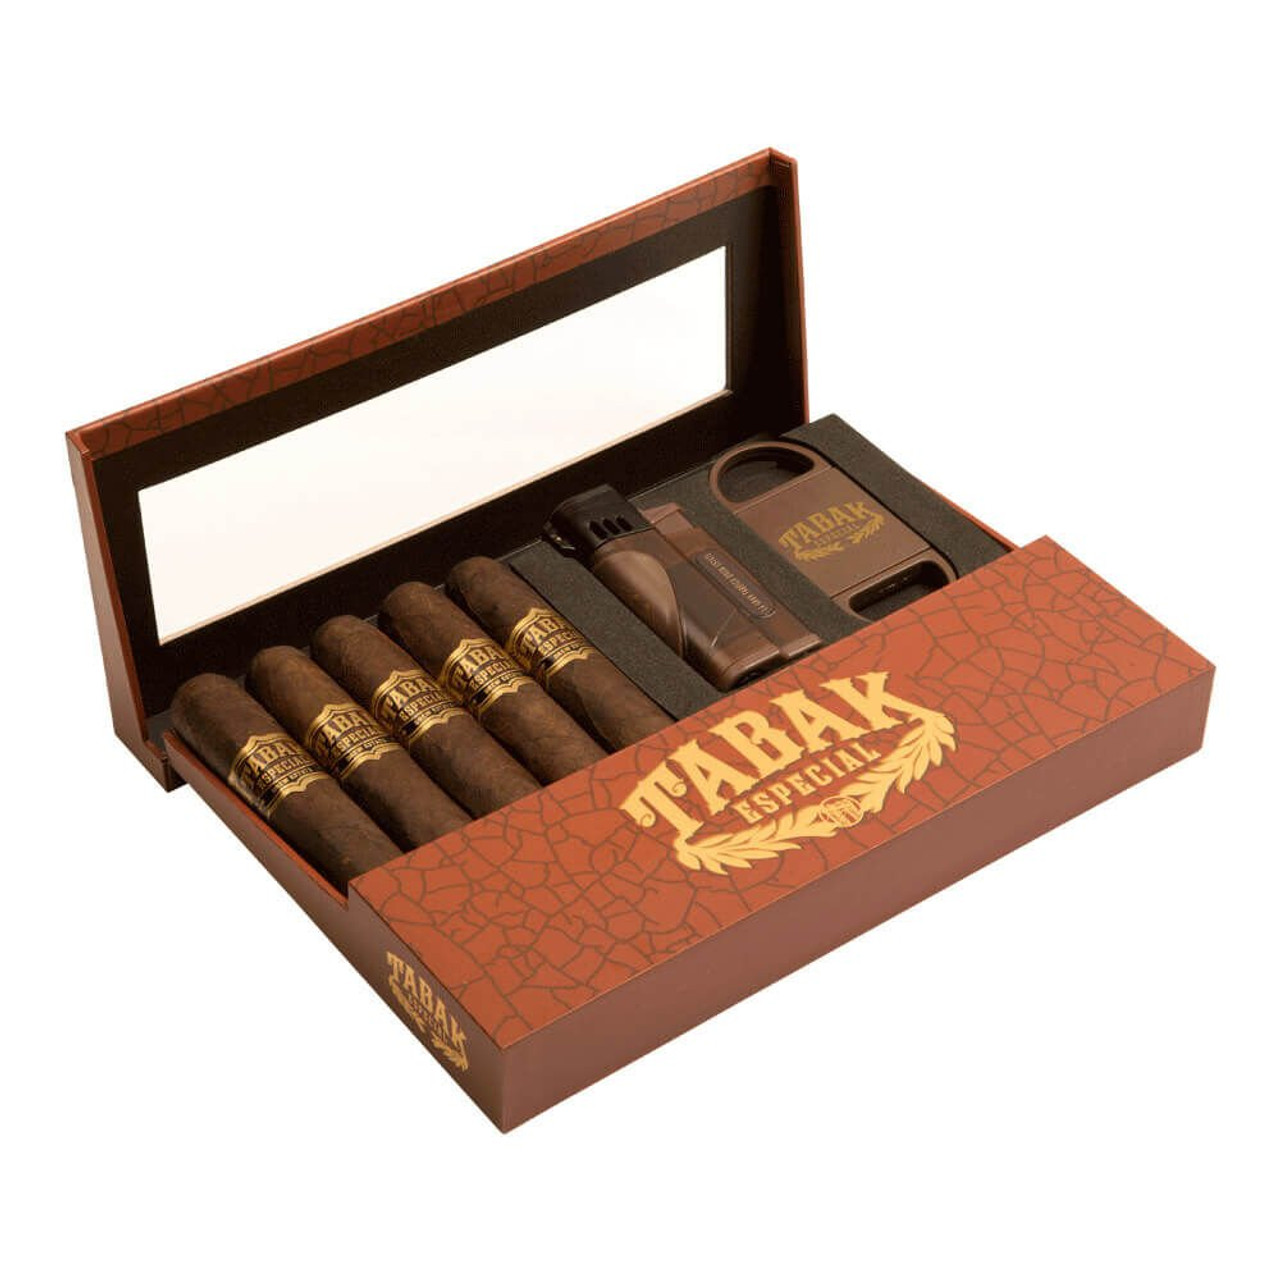 Tabak Especial by Drew Estate Toro Maduro Gift Set Cigars - 6 x 52 (Box of 5)